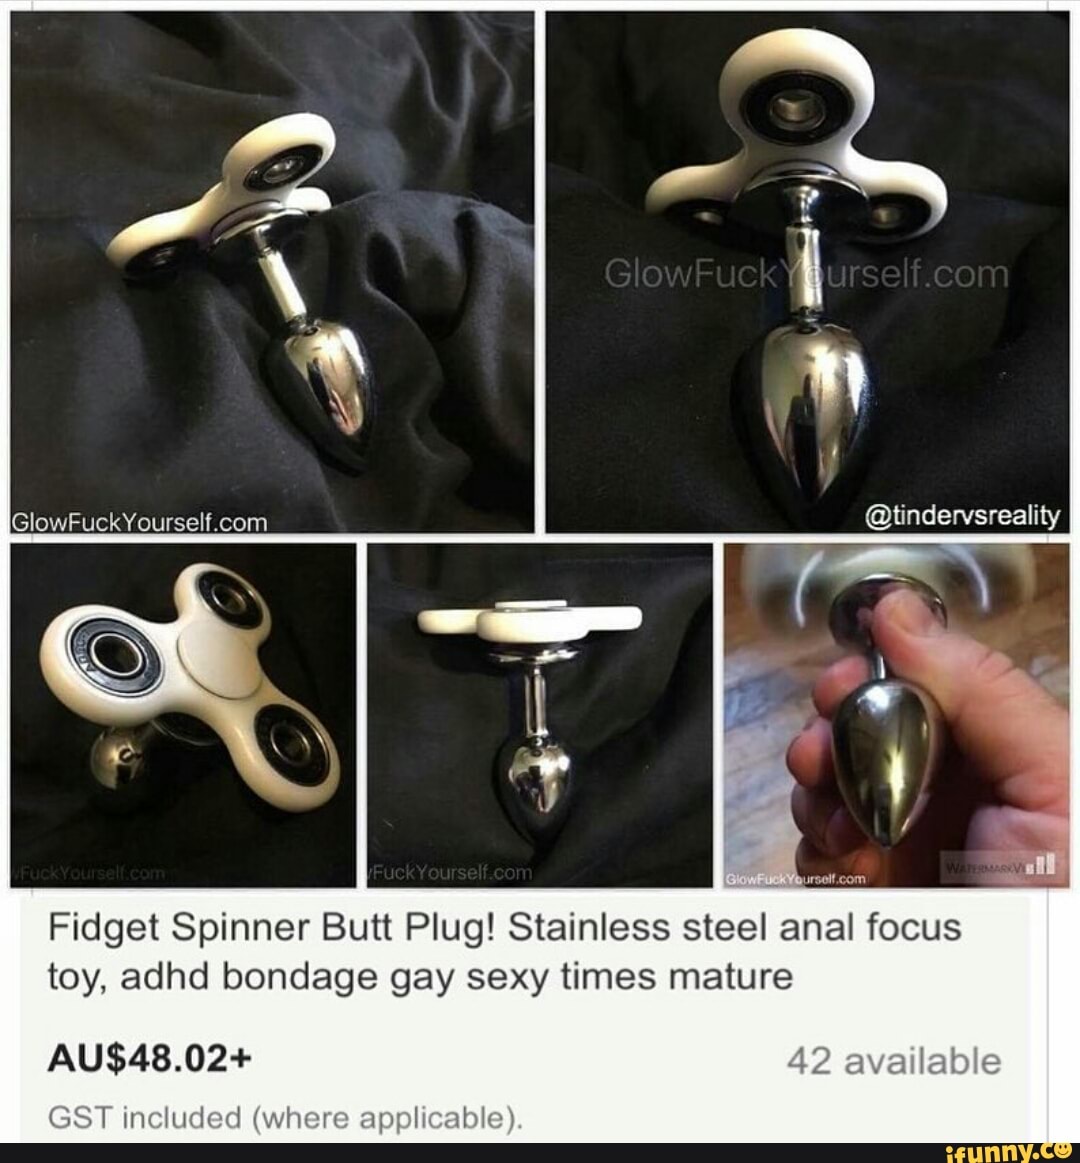 Plug spinner butt ❤️ Fidget